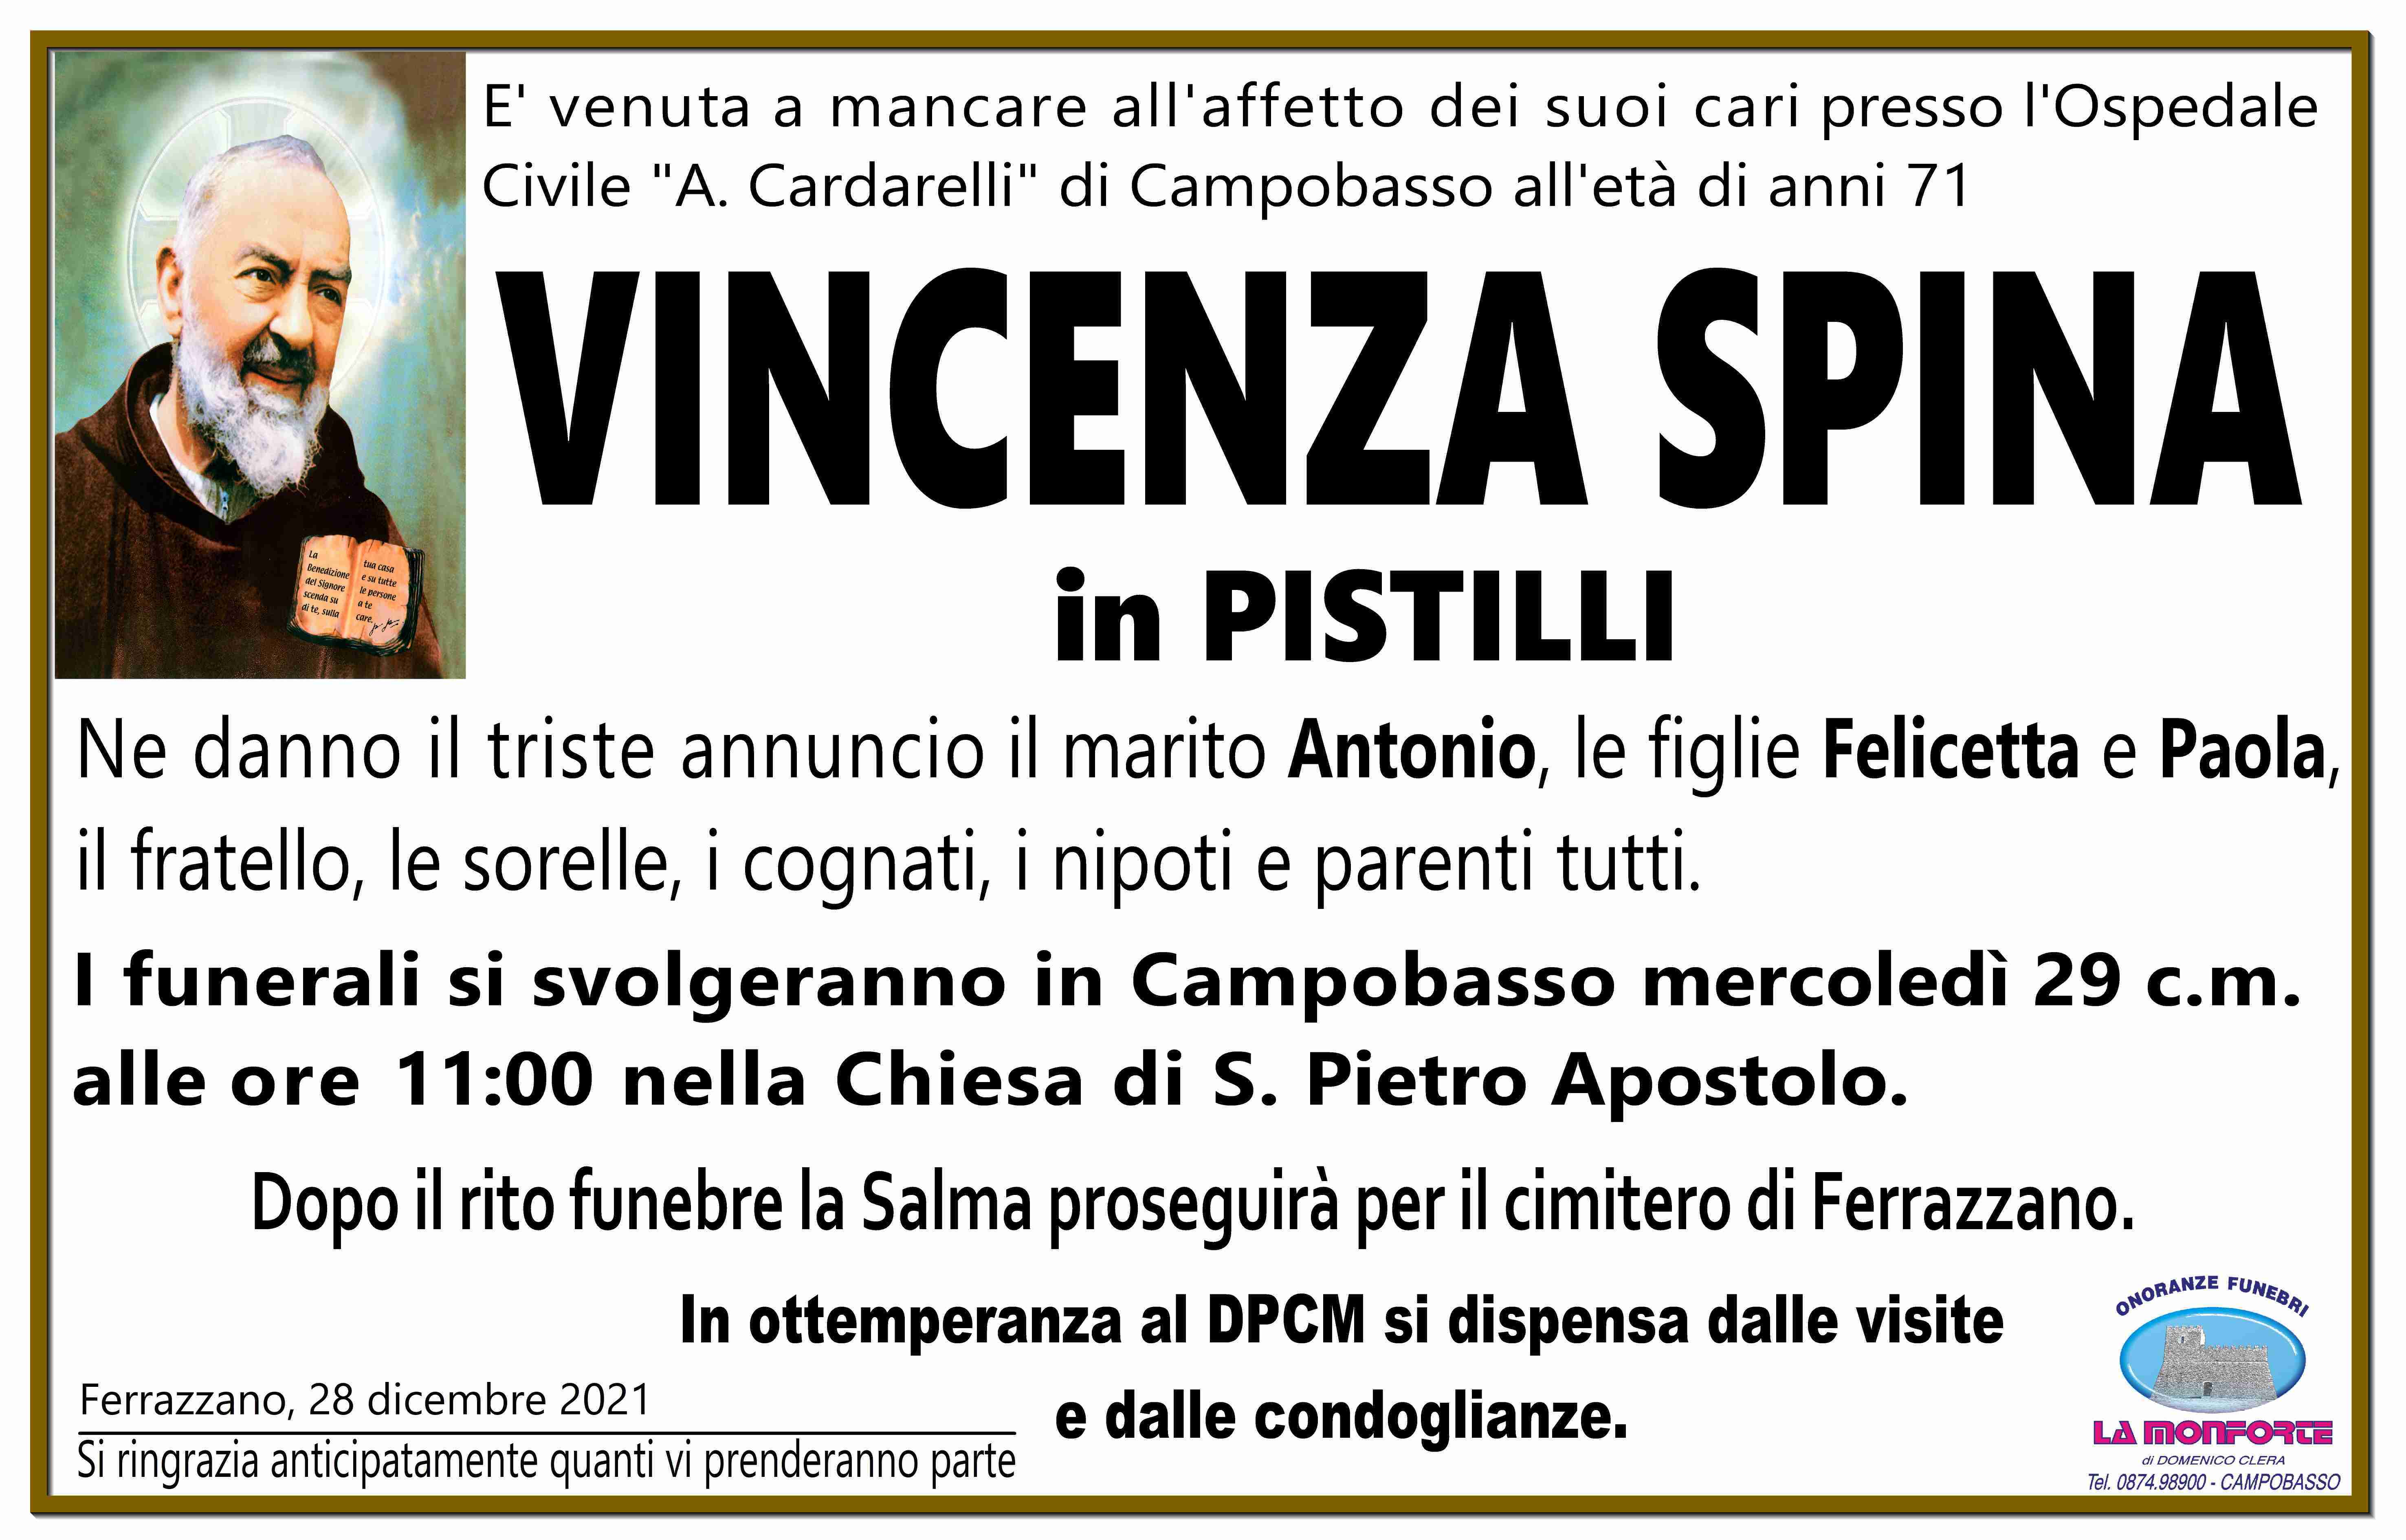 Vincenza Spina